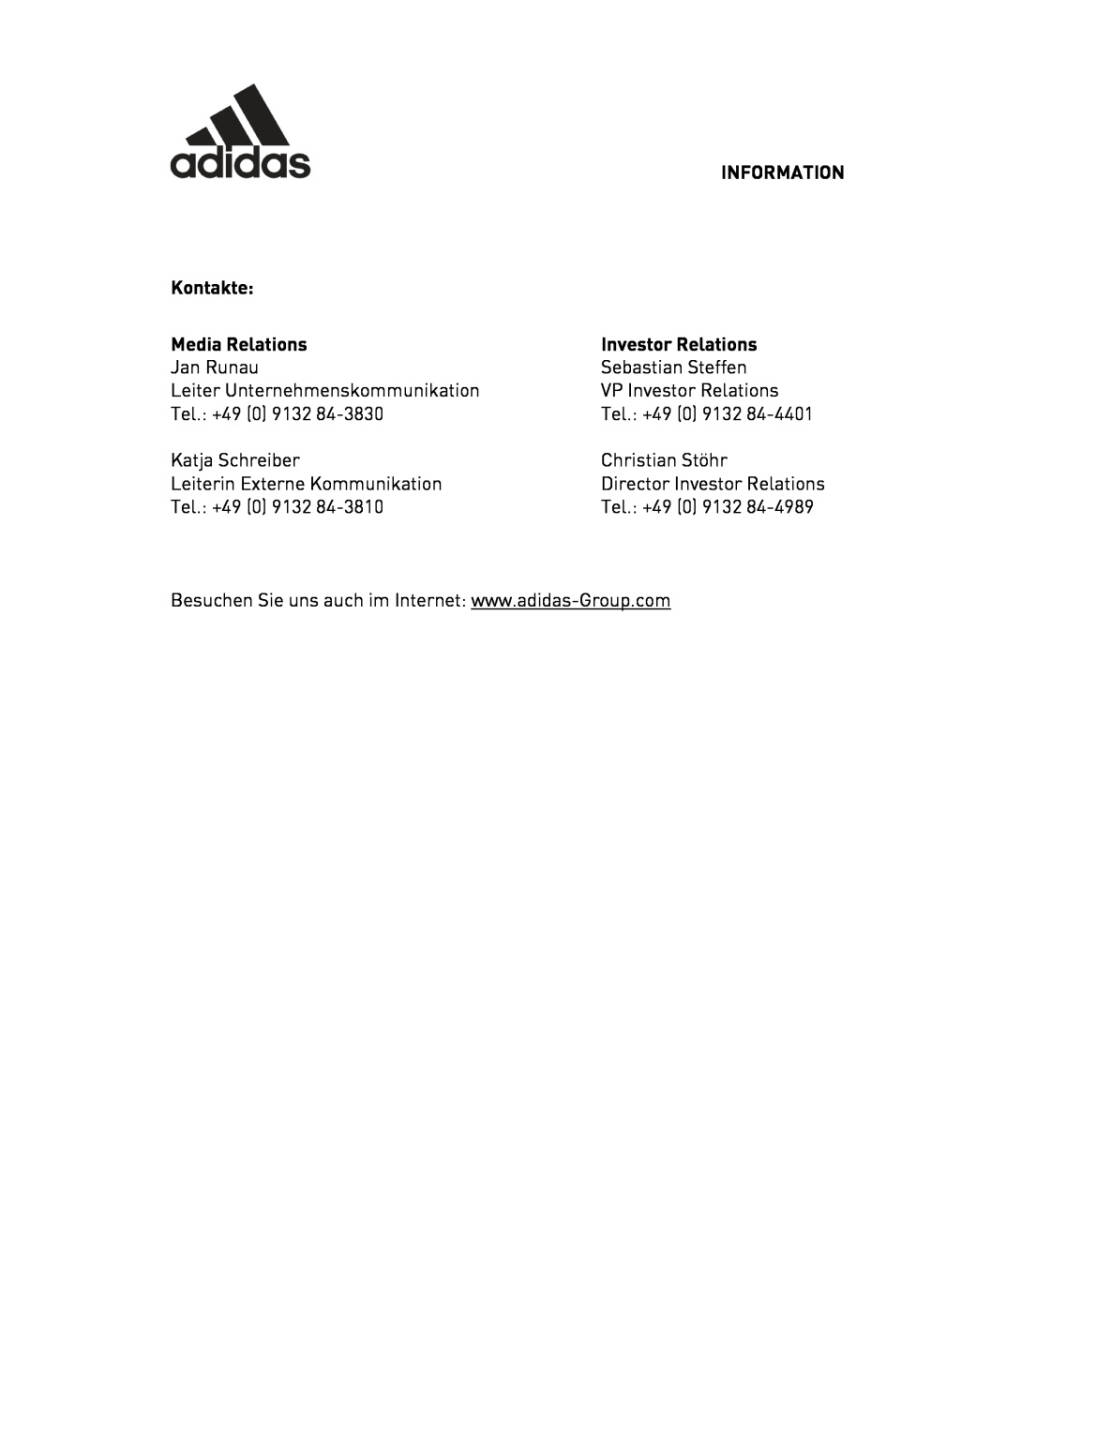 adidas und FC Chelsea beenden Partnerschaft, Seite 2/2, komplettes Dokument unter http://boerse-social.com/static/uploads/file_1045_adidas_und_fc_chelsea_beenden_partnerschaft.pdf